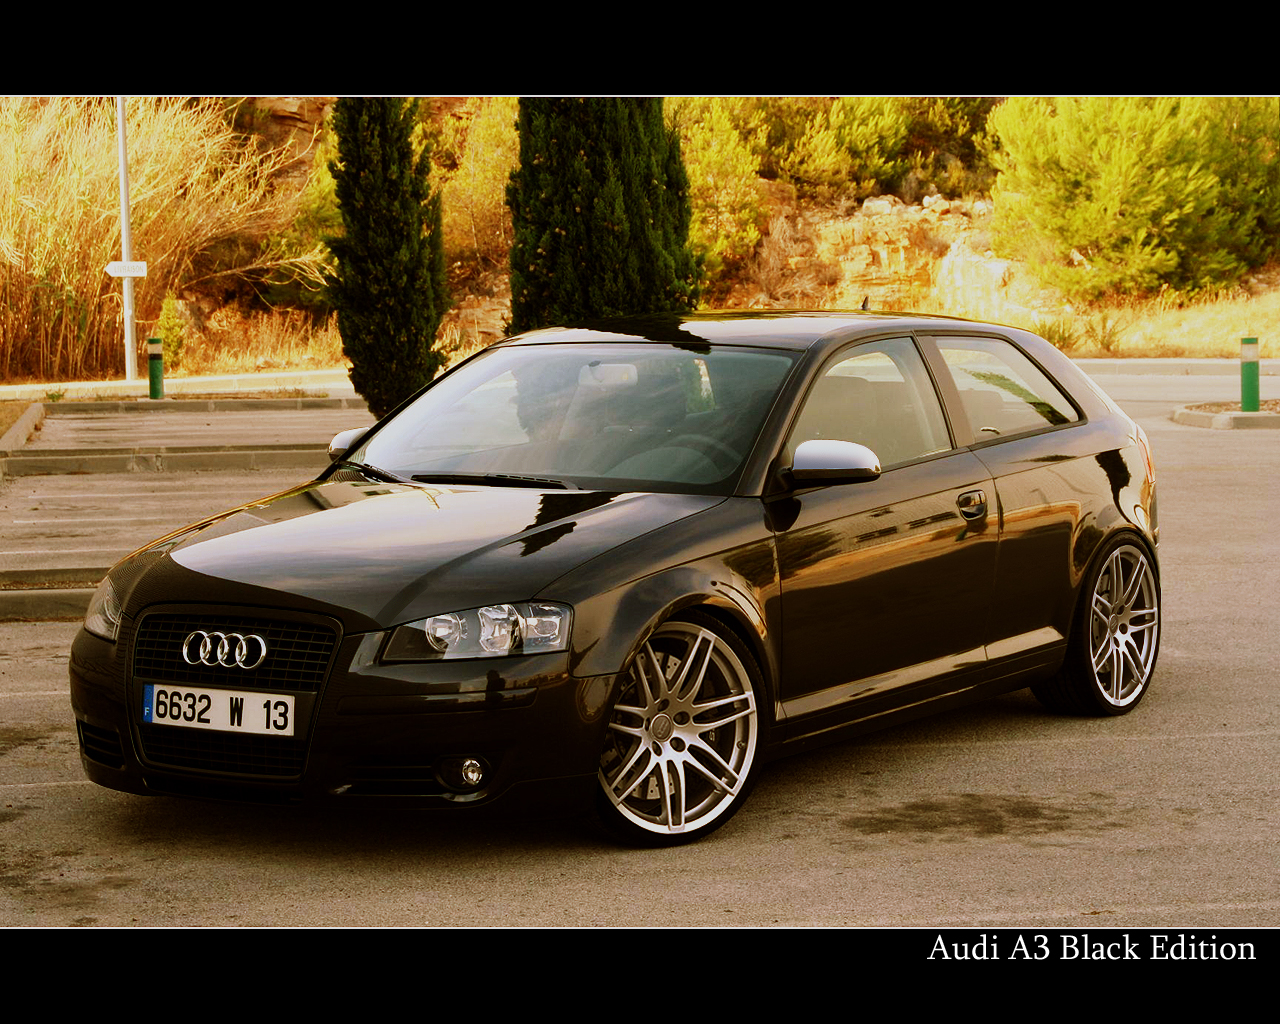 Audi A3 Black Edition Wallpaper - Audi A3 Black Edition , HD Wallpaper & Backgrounds